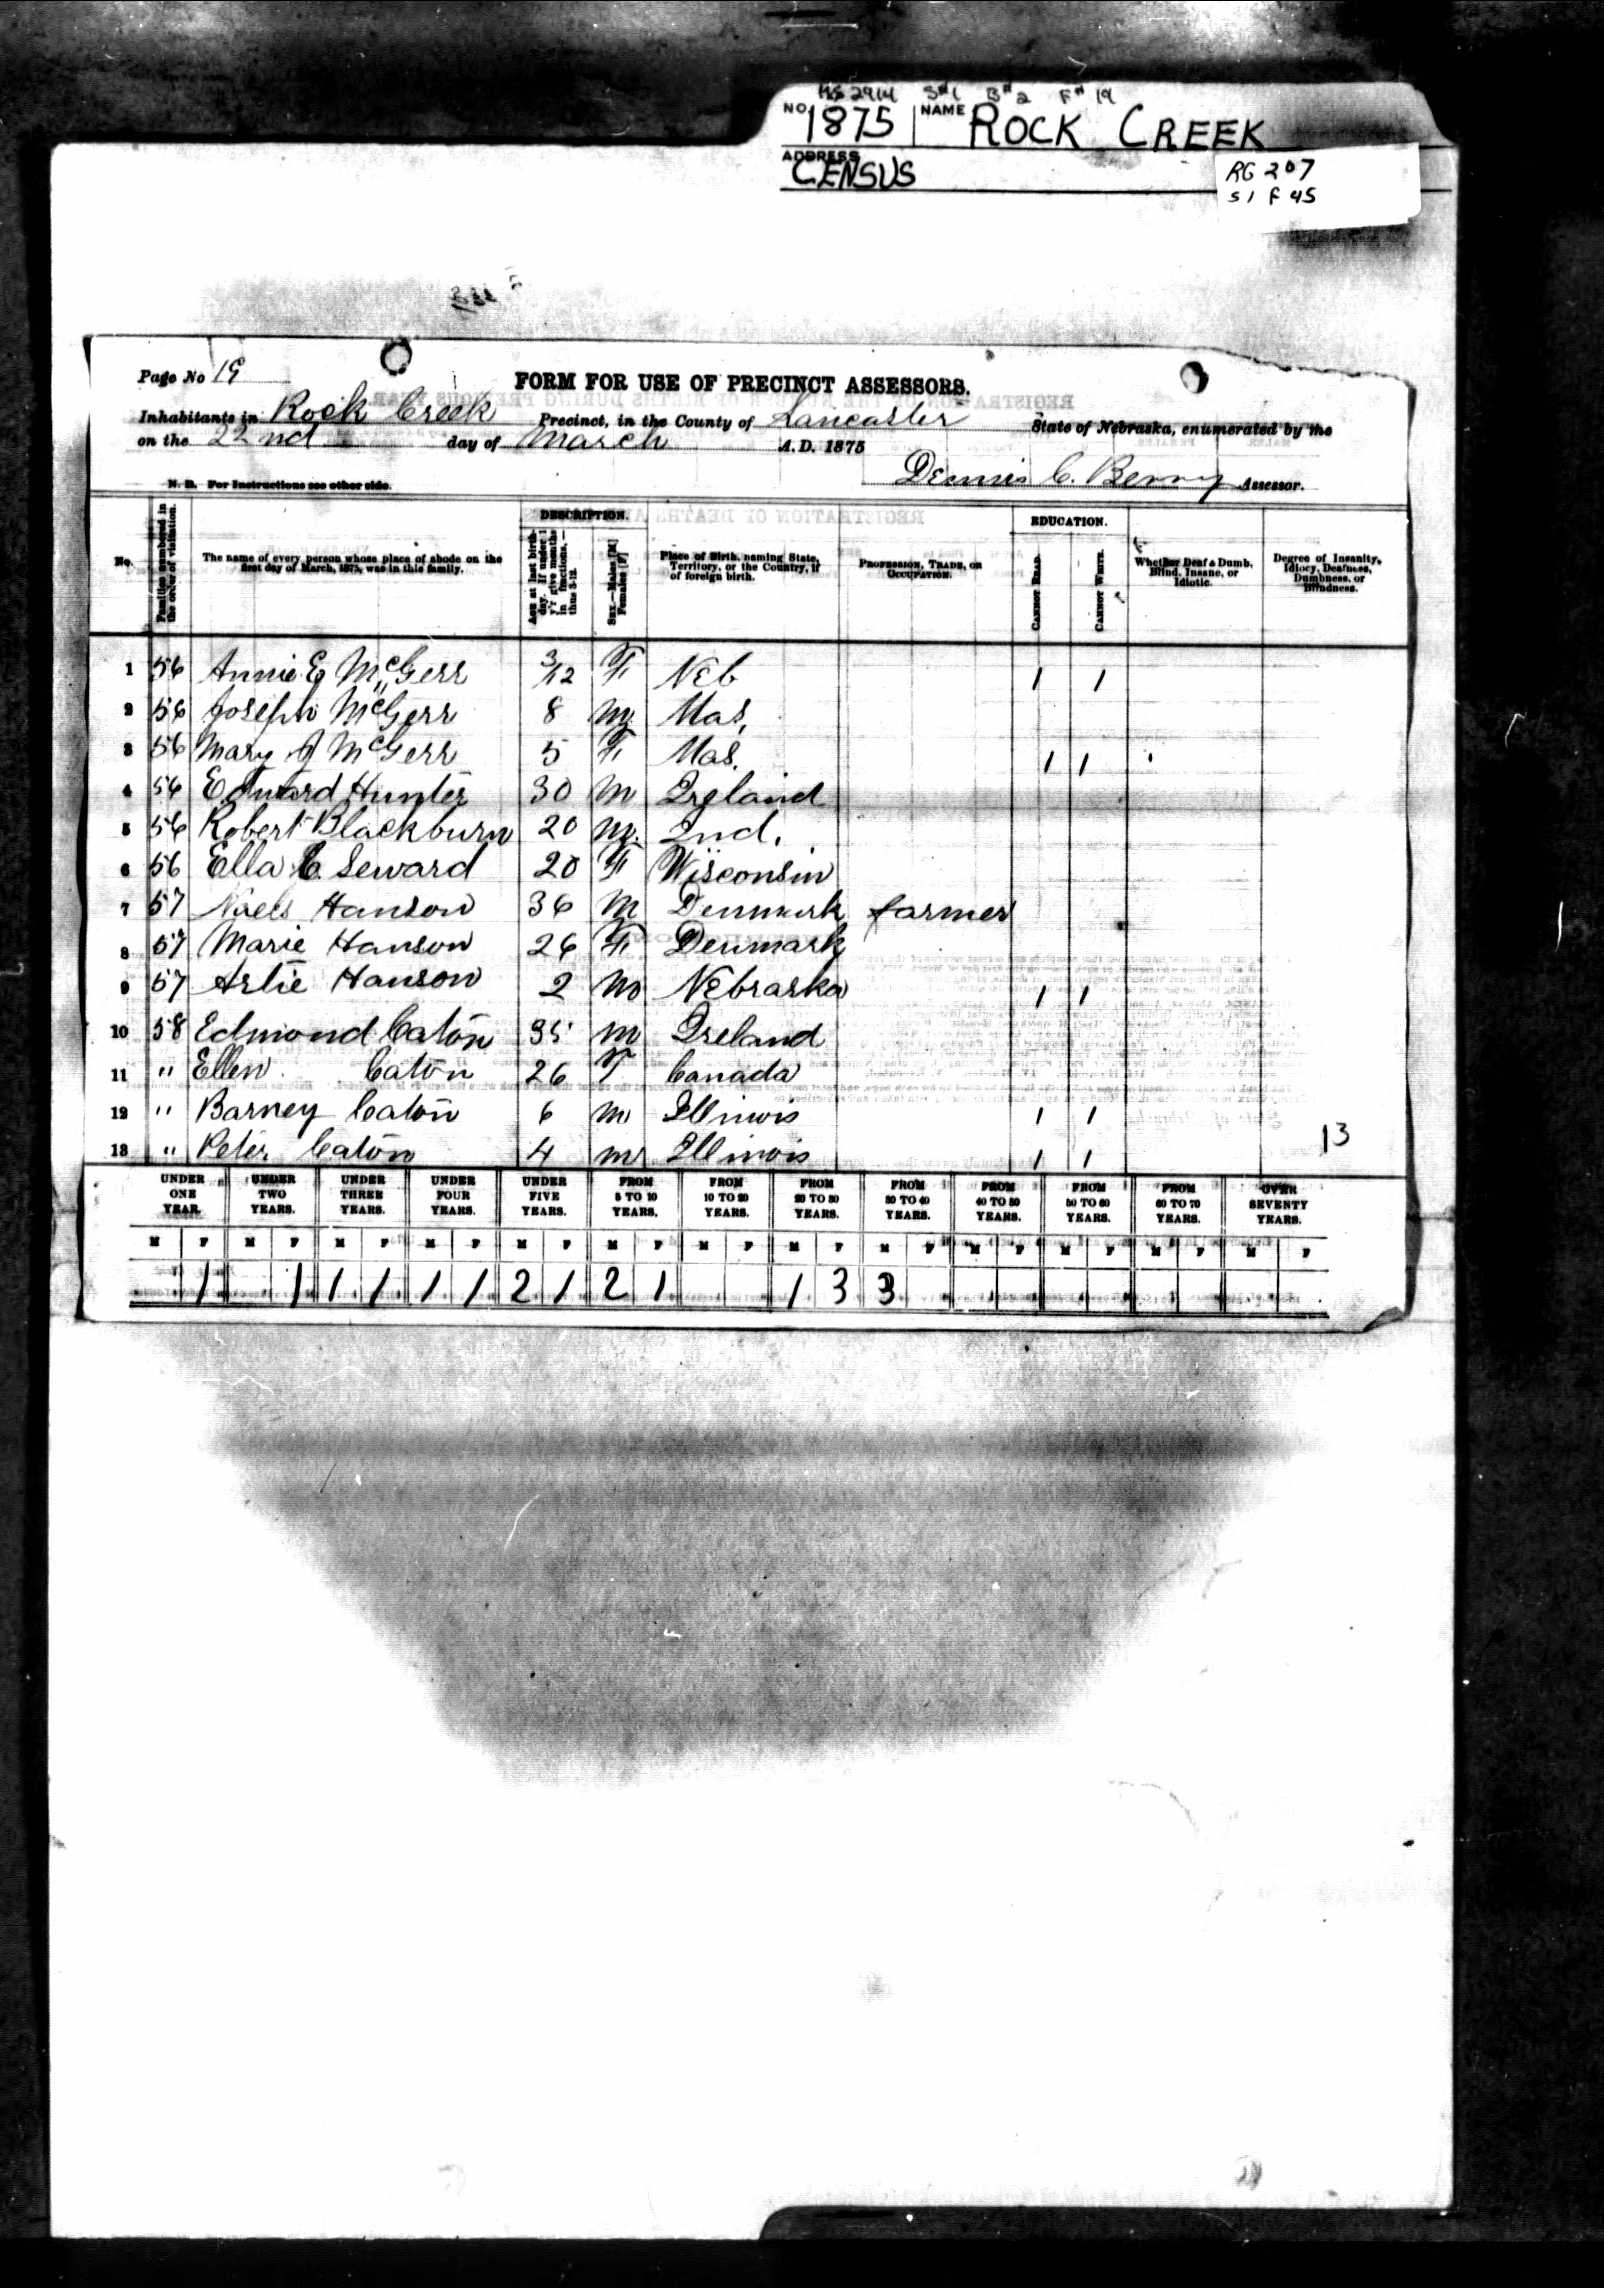 Nebraska Censuses & Substitute Name Lists 1854-2000 - SOFTBOUND